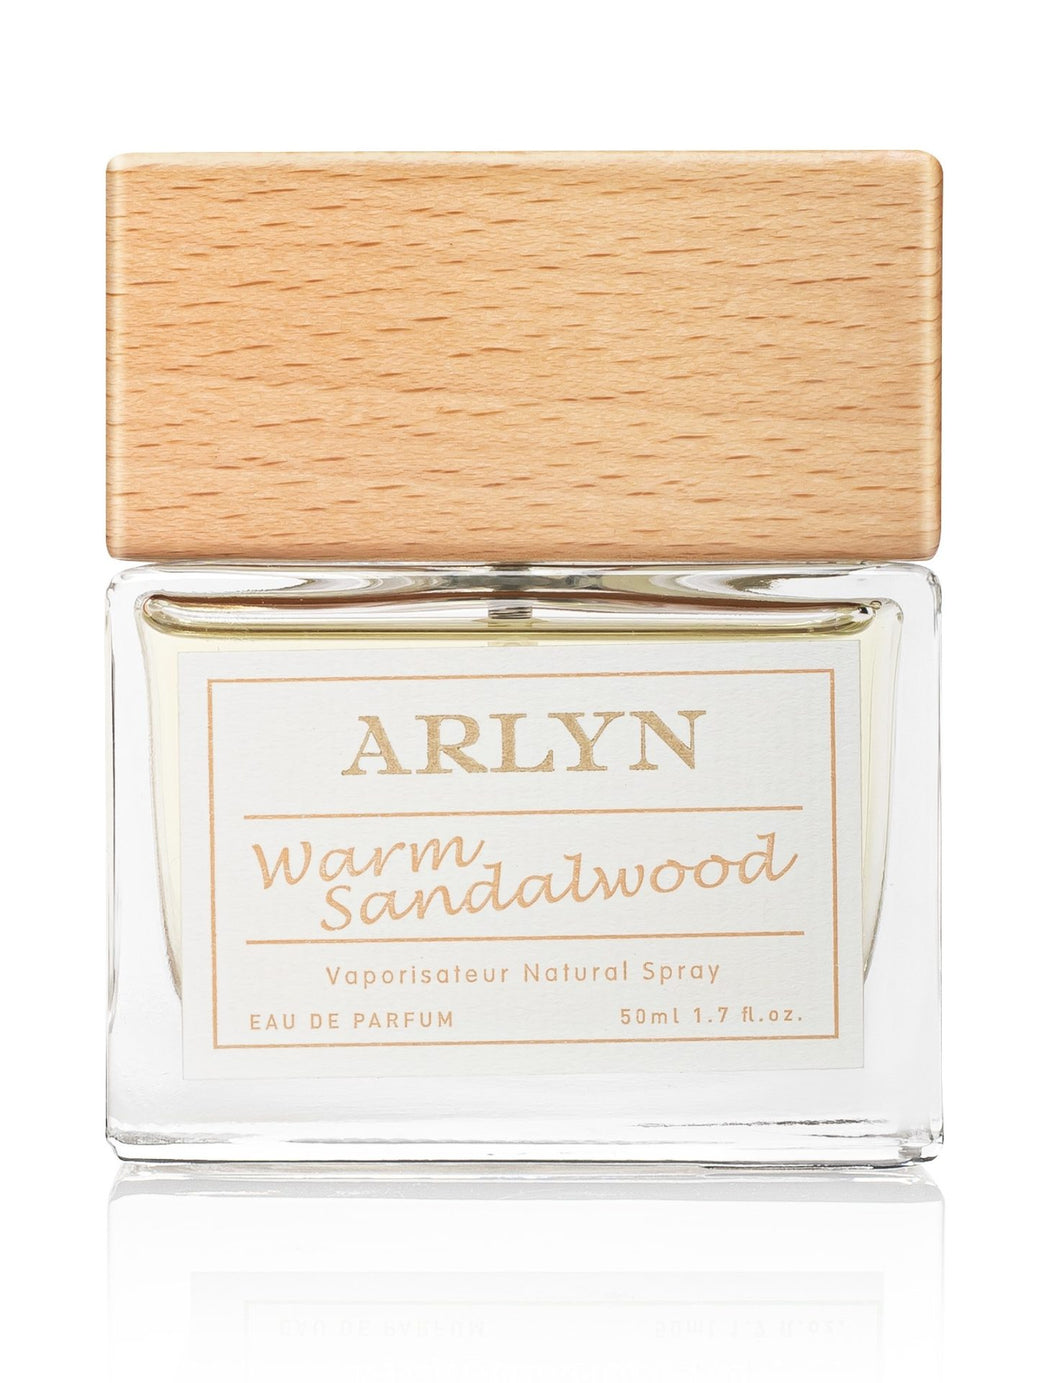 warm sandalwood arlyn eau de parfum 1.7oz for womans - alwaysspecialgifts.com